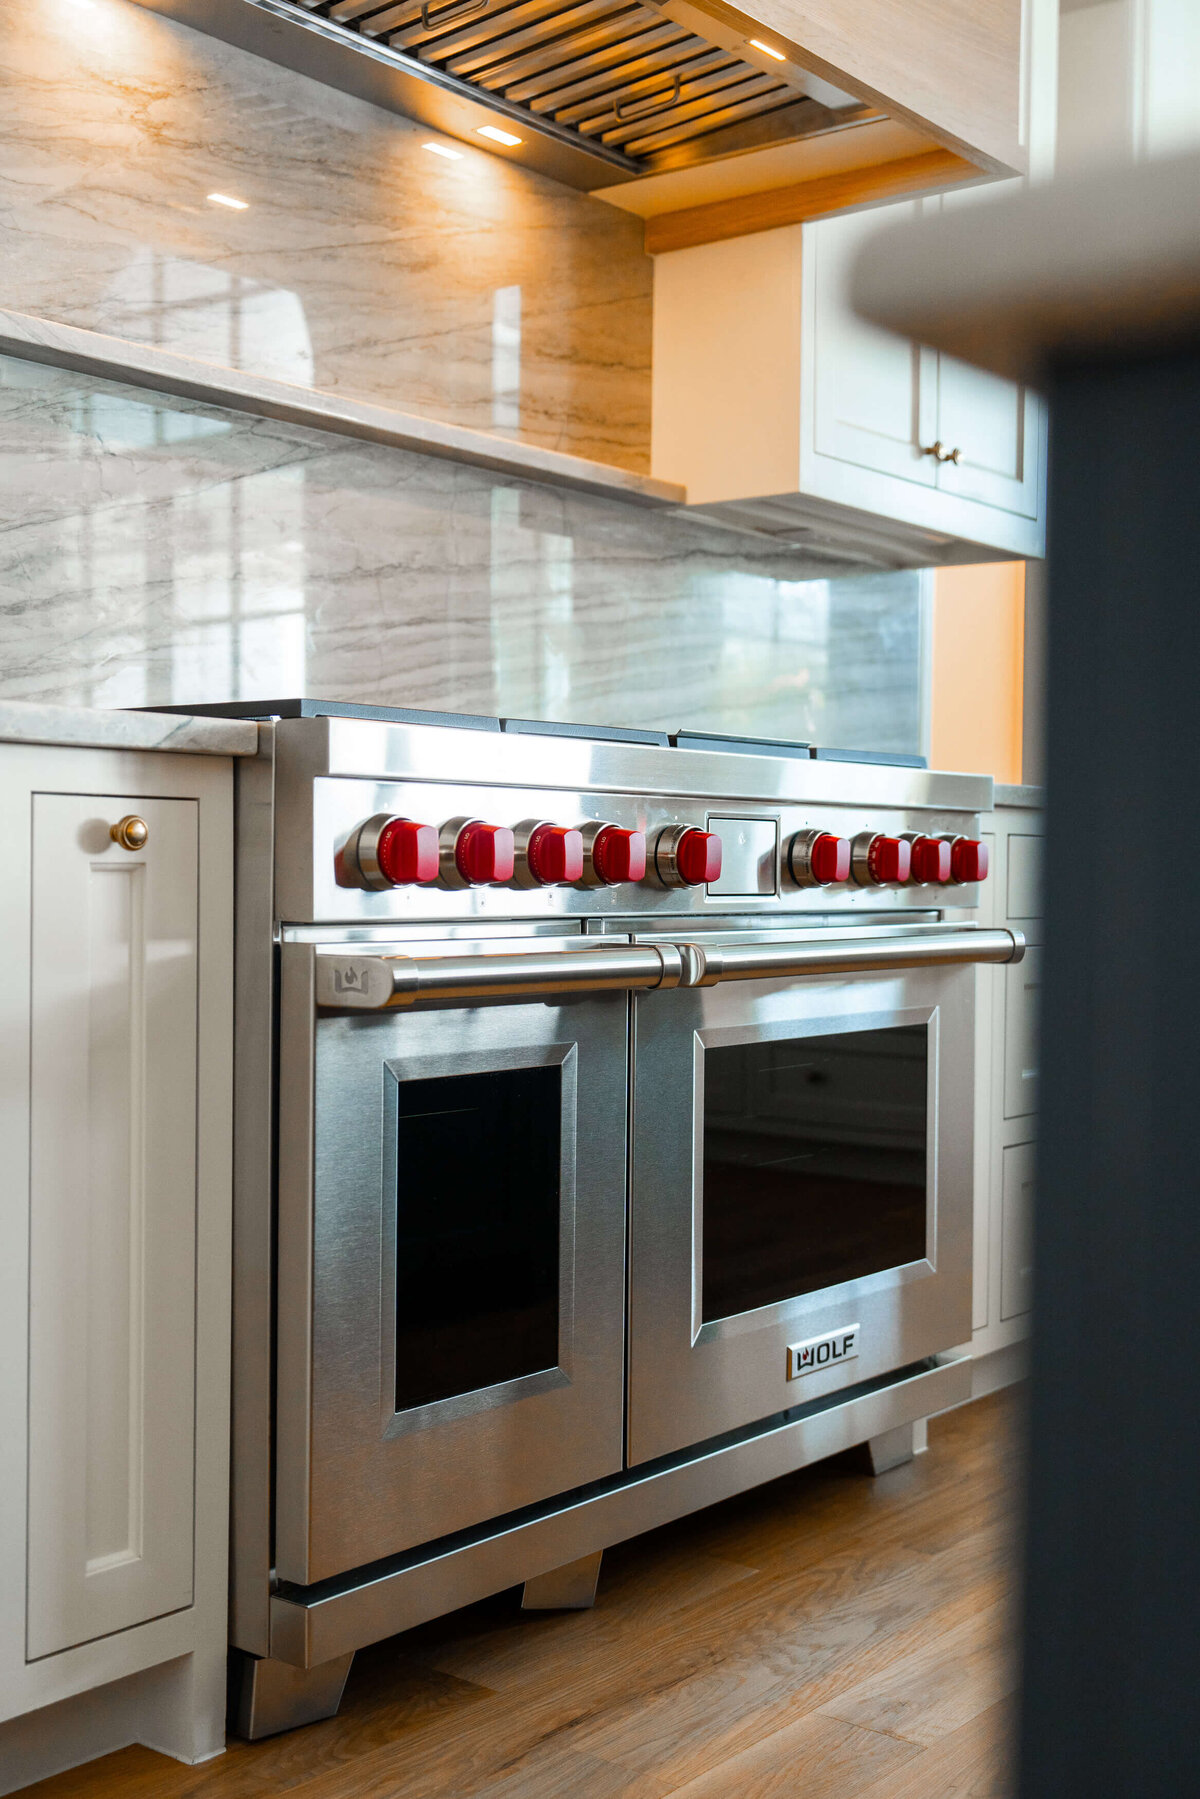 Appliance details in Colleyville custom home kitchen